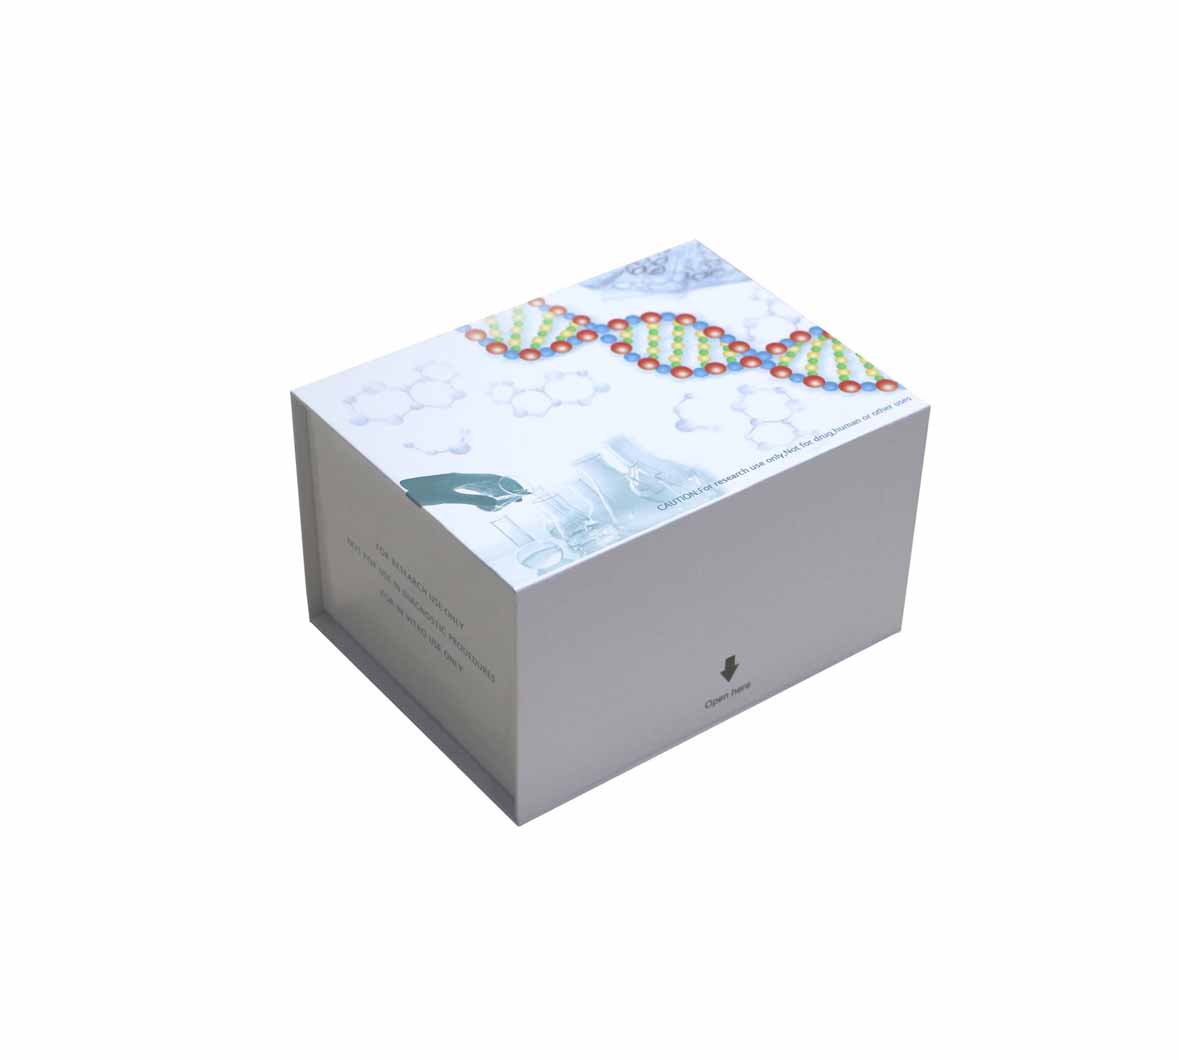 猴孕酮(PROG)ELISA测定试剂盒